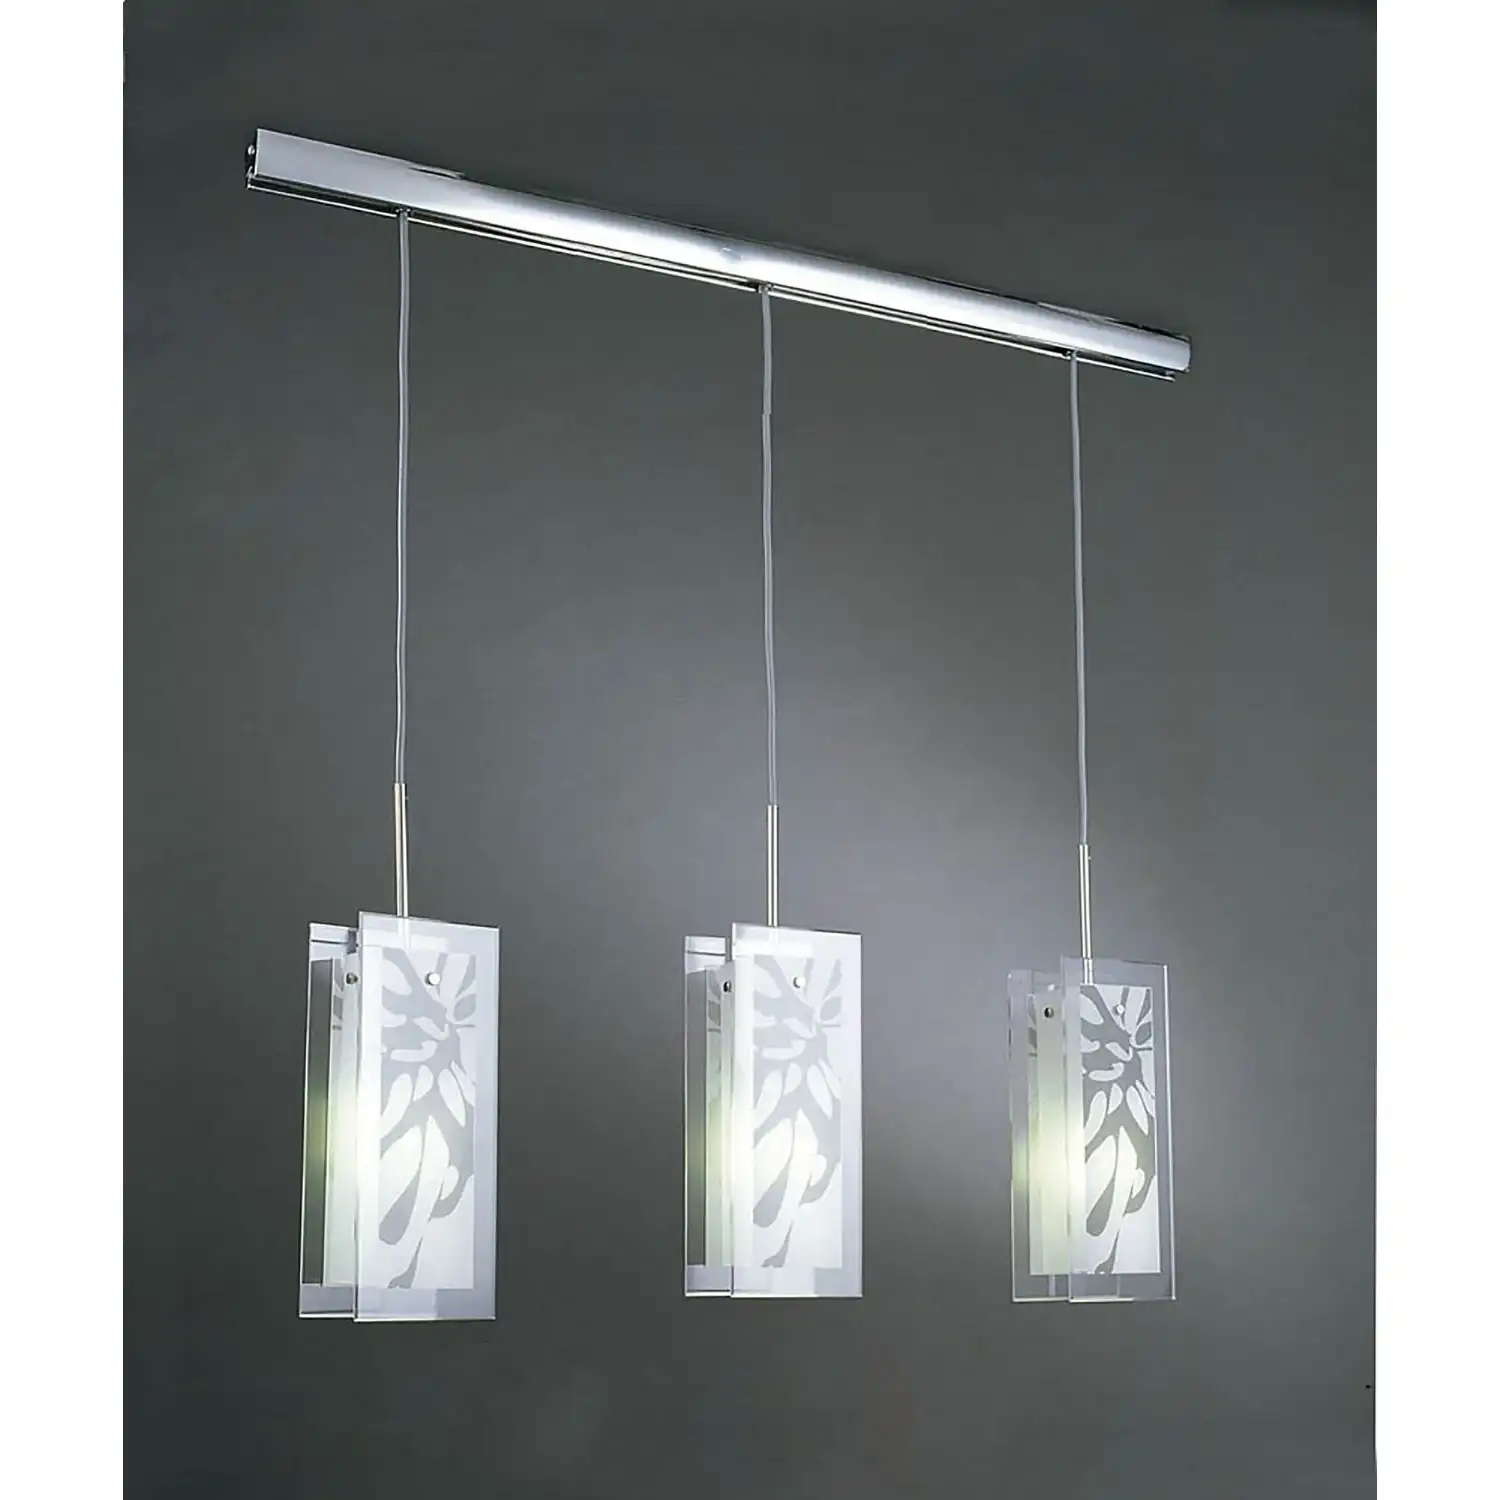 Euphoria Linear Pendant 3 Light L1 SGU10, Polished Chrome Opal White Glass, CFL Lamps INCLUDED